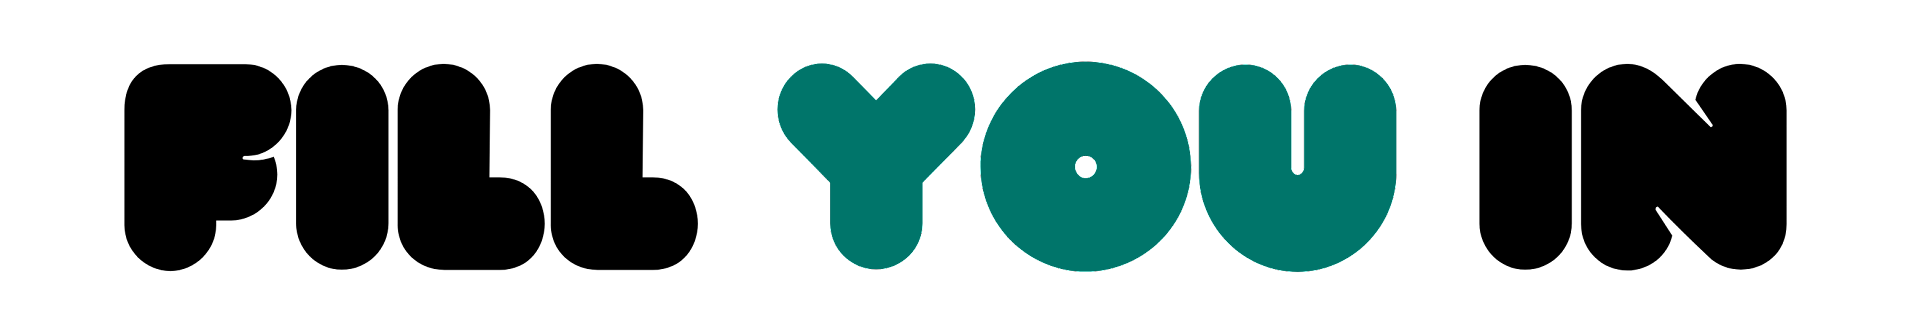 FYI Logo